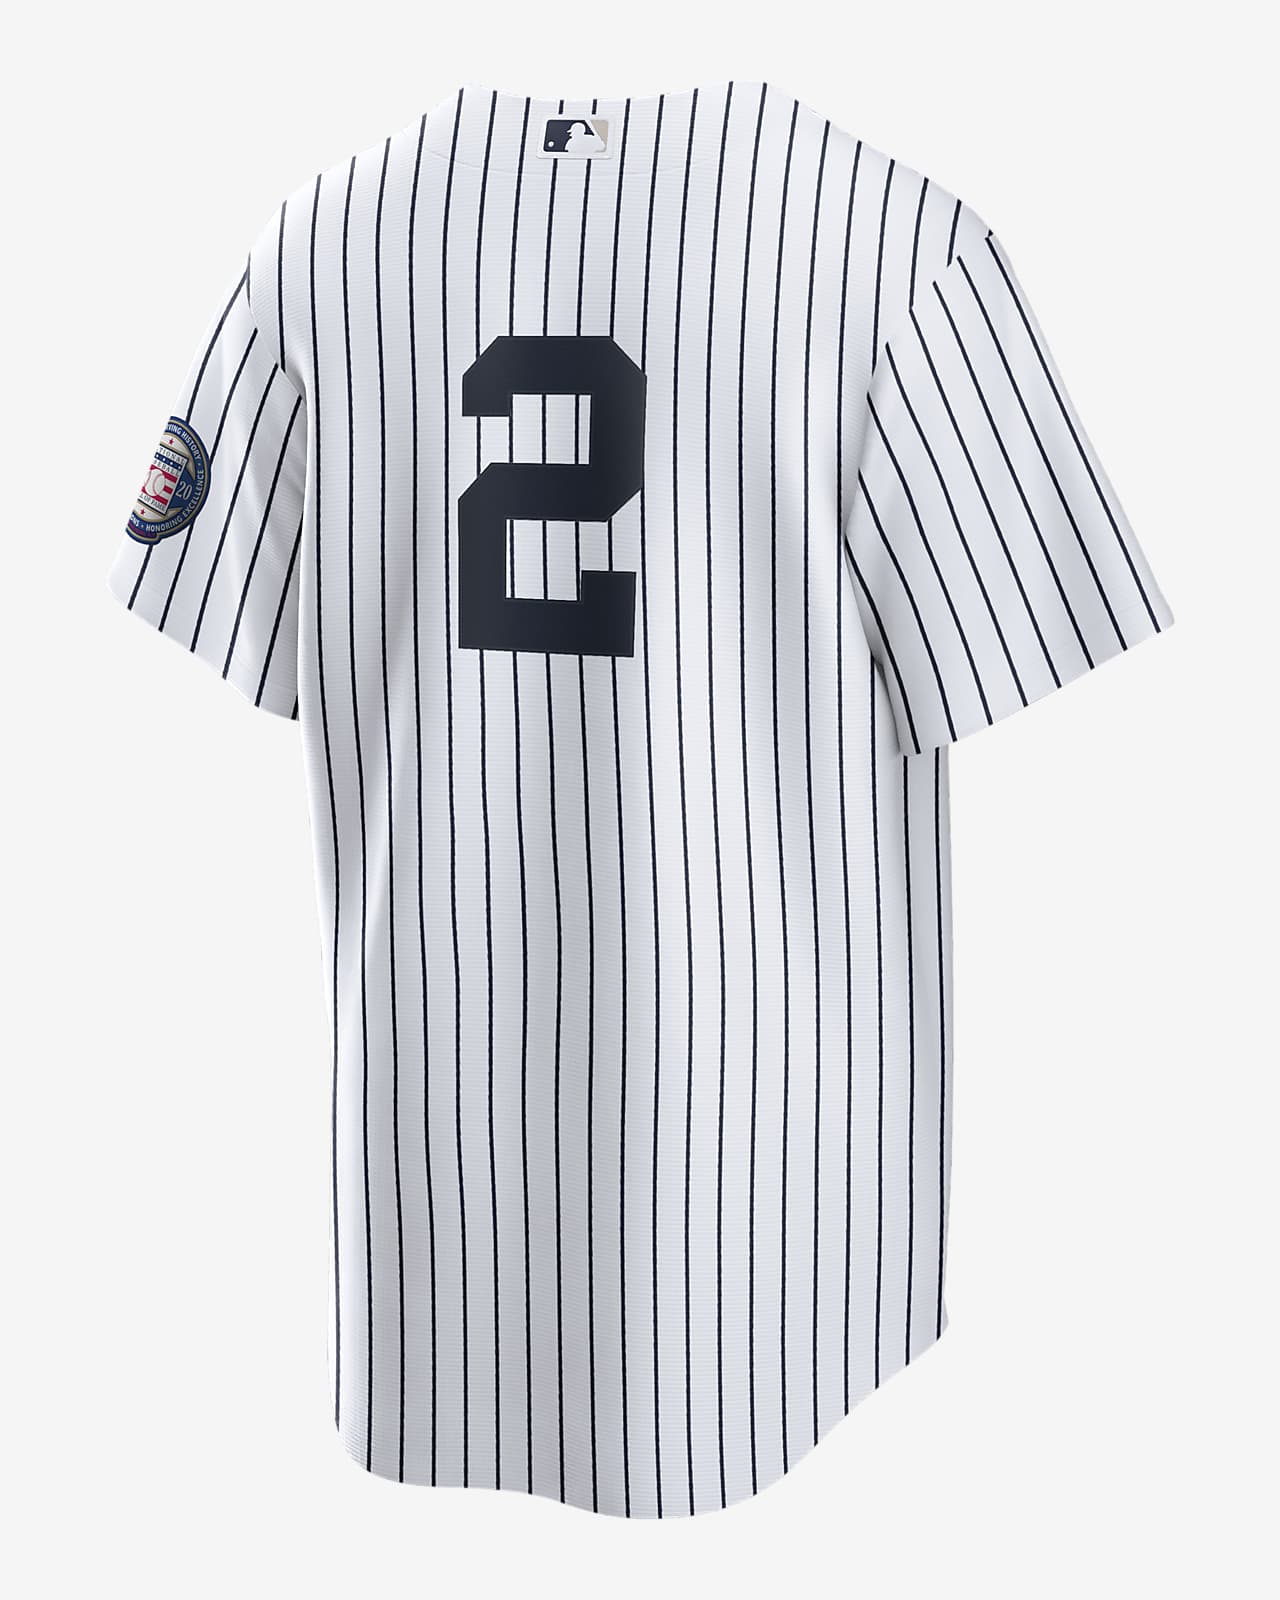 Nike MLB New York Yankees Fashion Jersey Black - BLACK